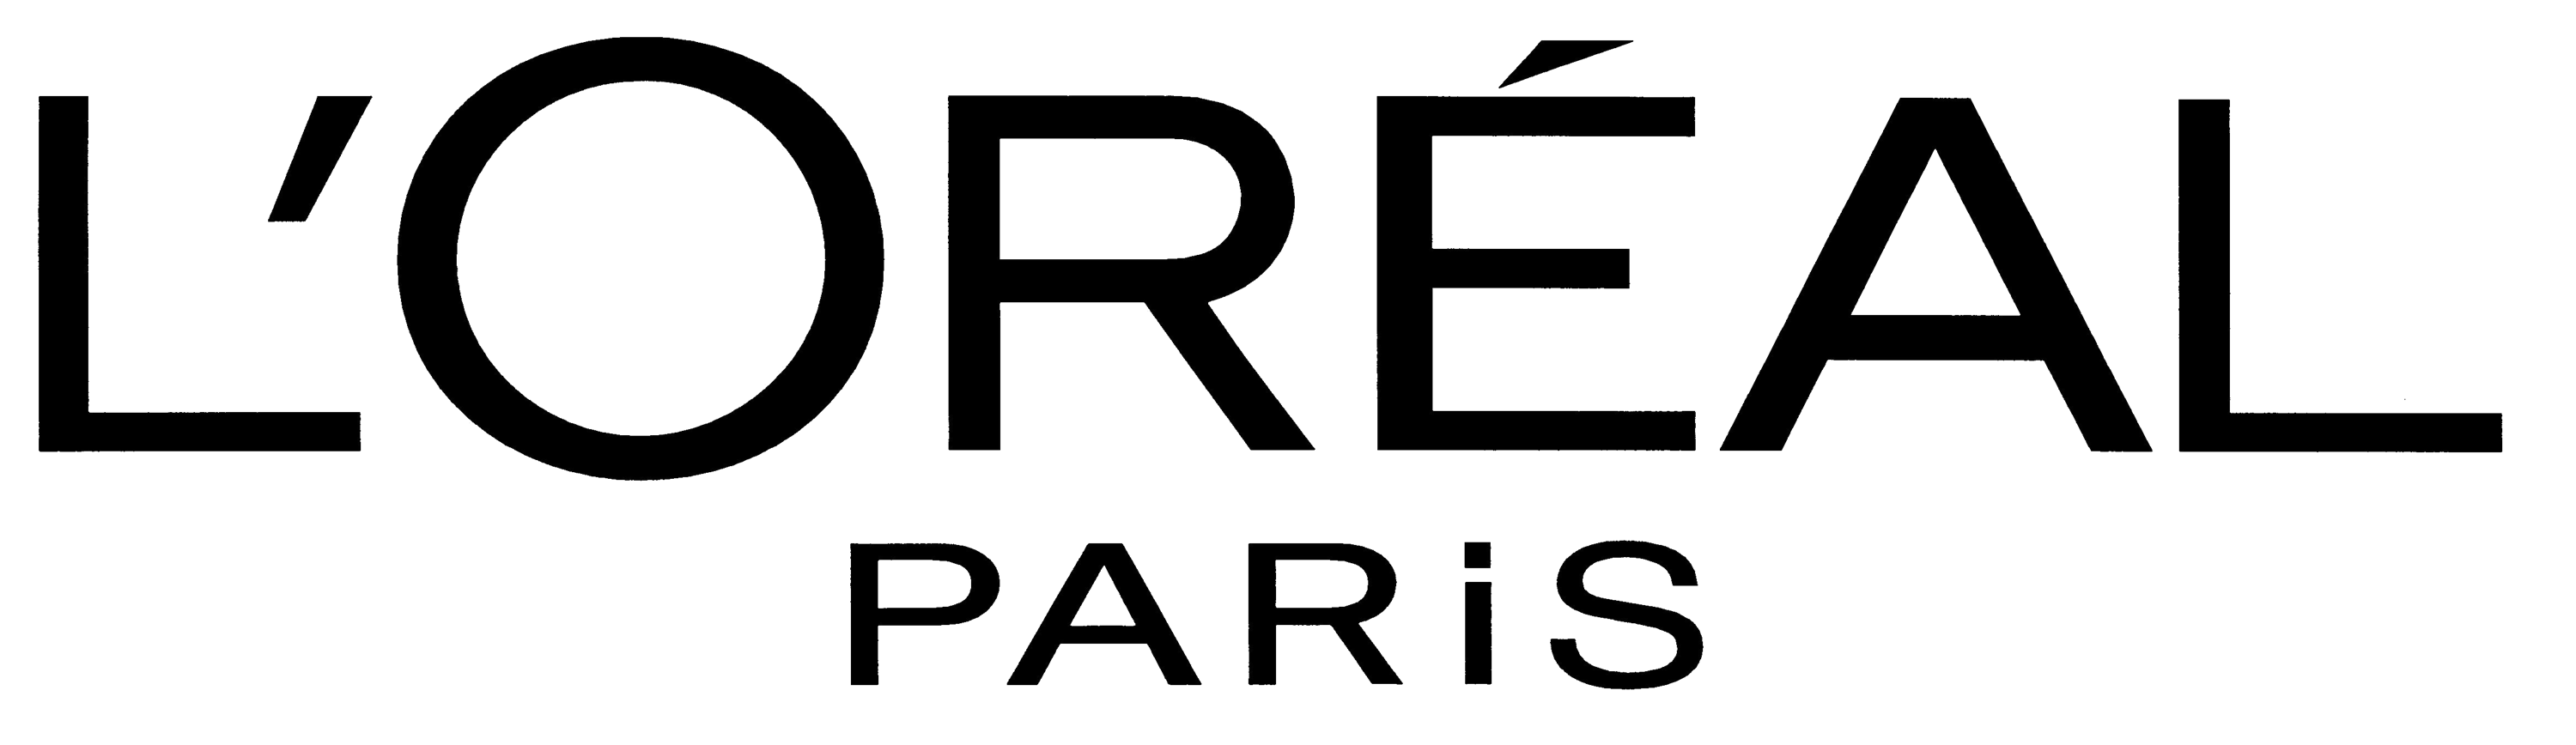 L'Oreal Logo